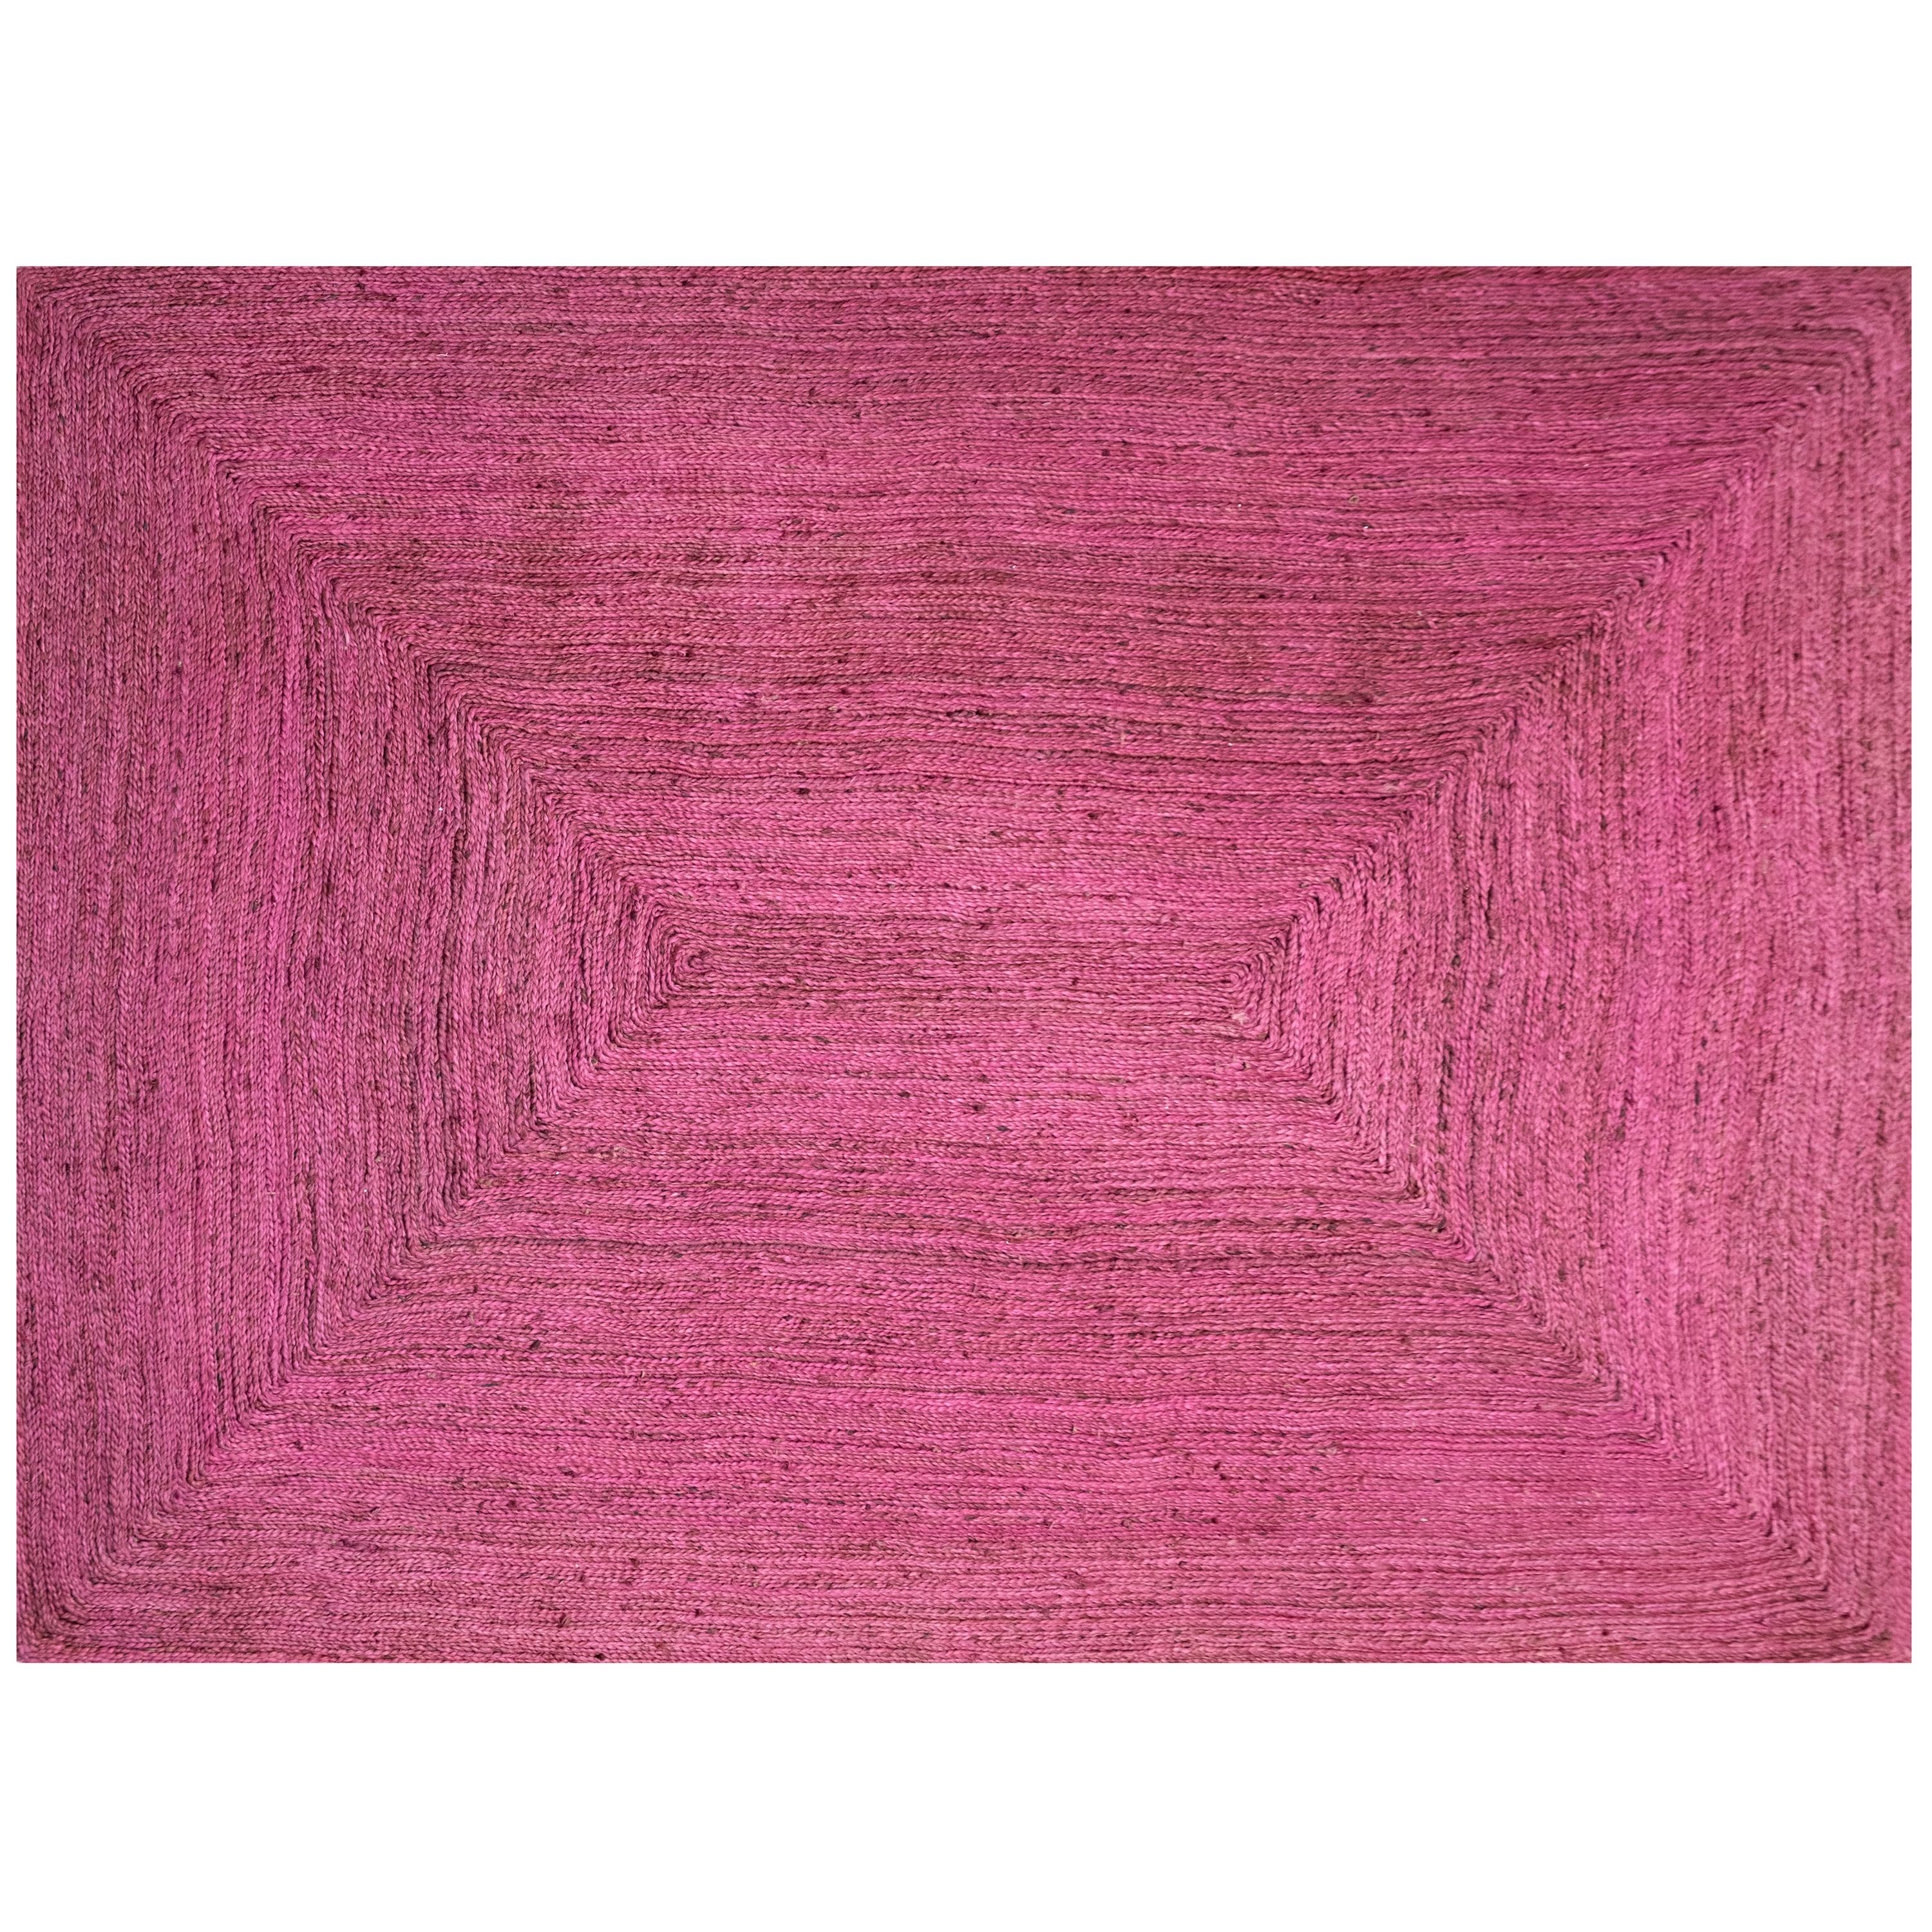 Modern Jute Handwoven Carpet Rug by Kilombo Home in Pink